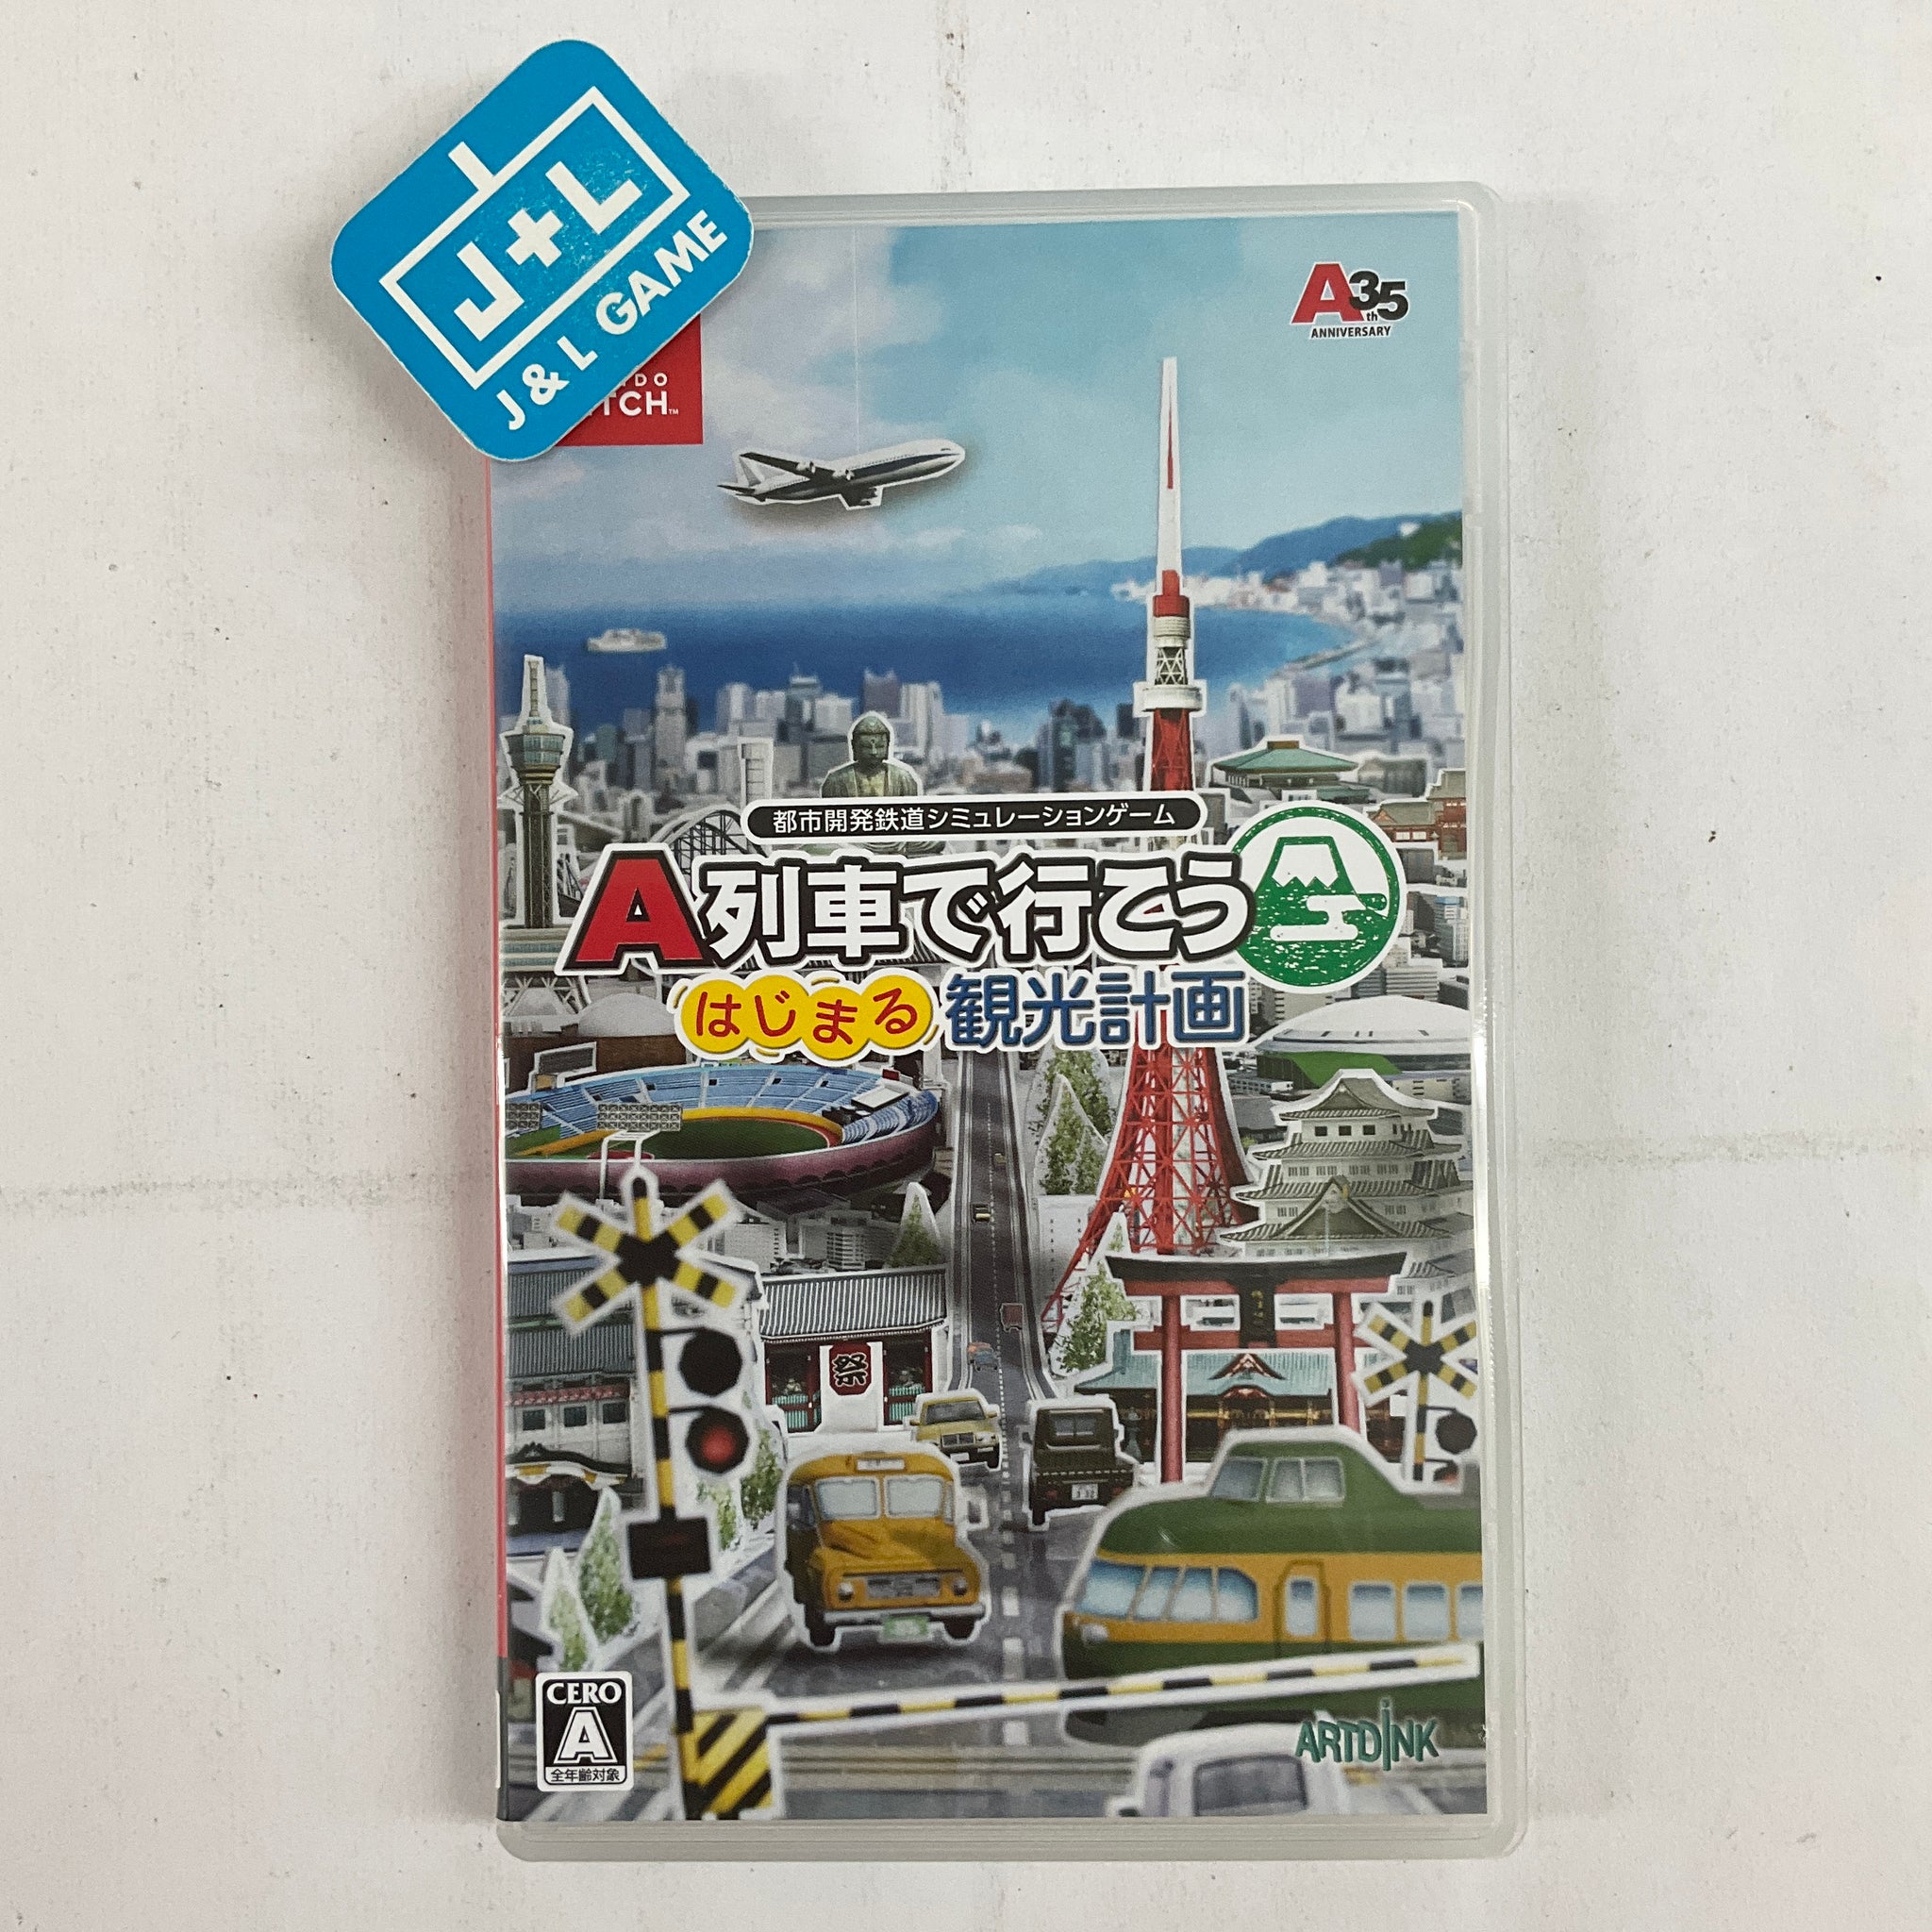 A-Train Hajimaru Kankou Keikaku (English Sub) - (NSW) Nintendo Switch [Pre-Owned] (Japanese Import) Video Games Artdink   